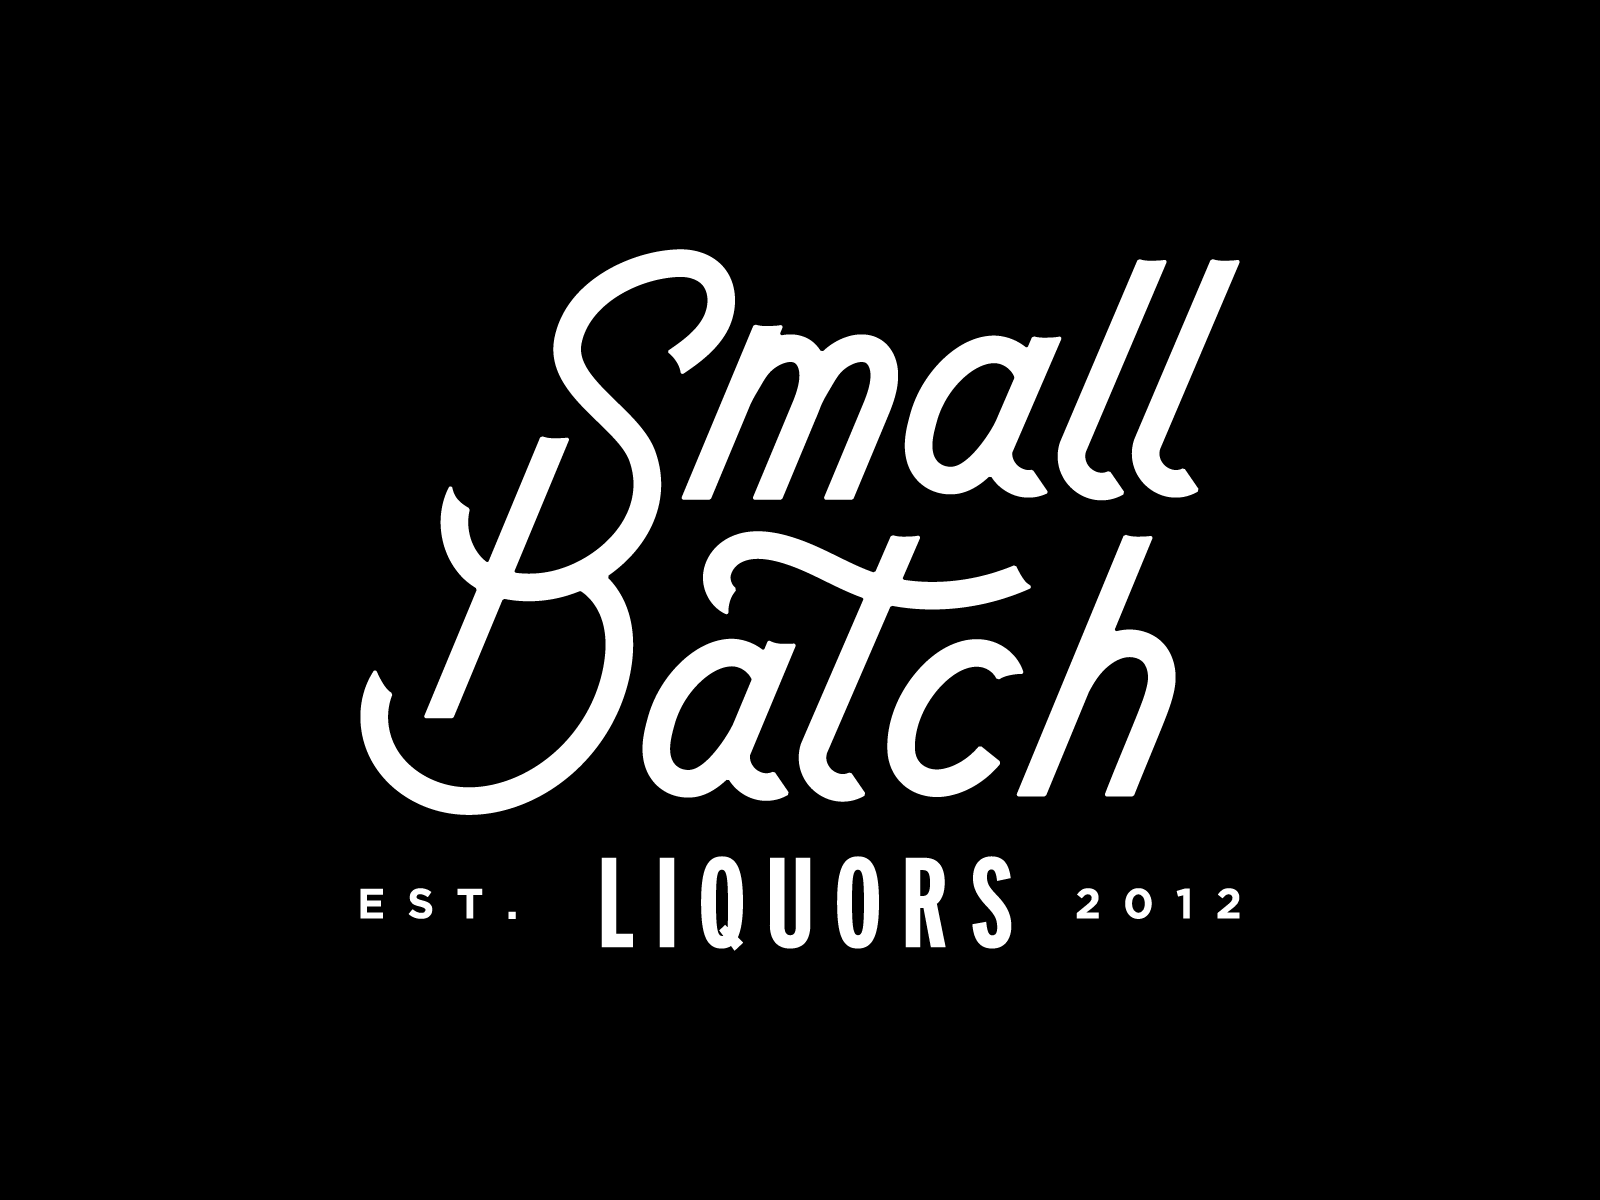 Small Batch Liquors Logotype by William Johnston on Dribbble